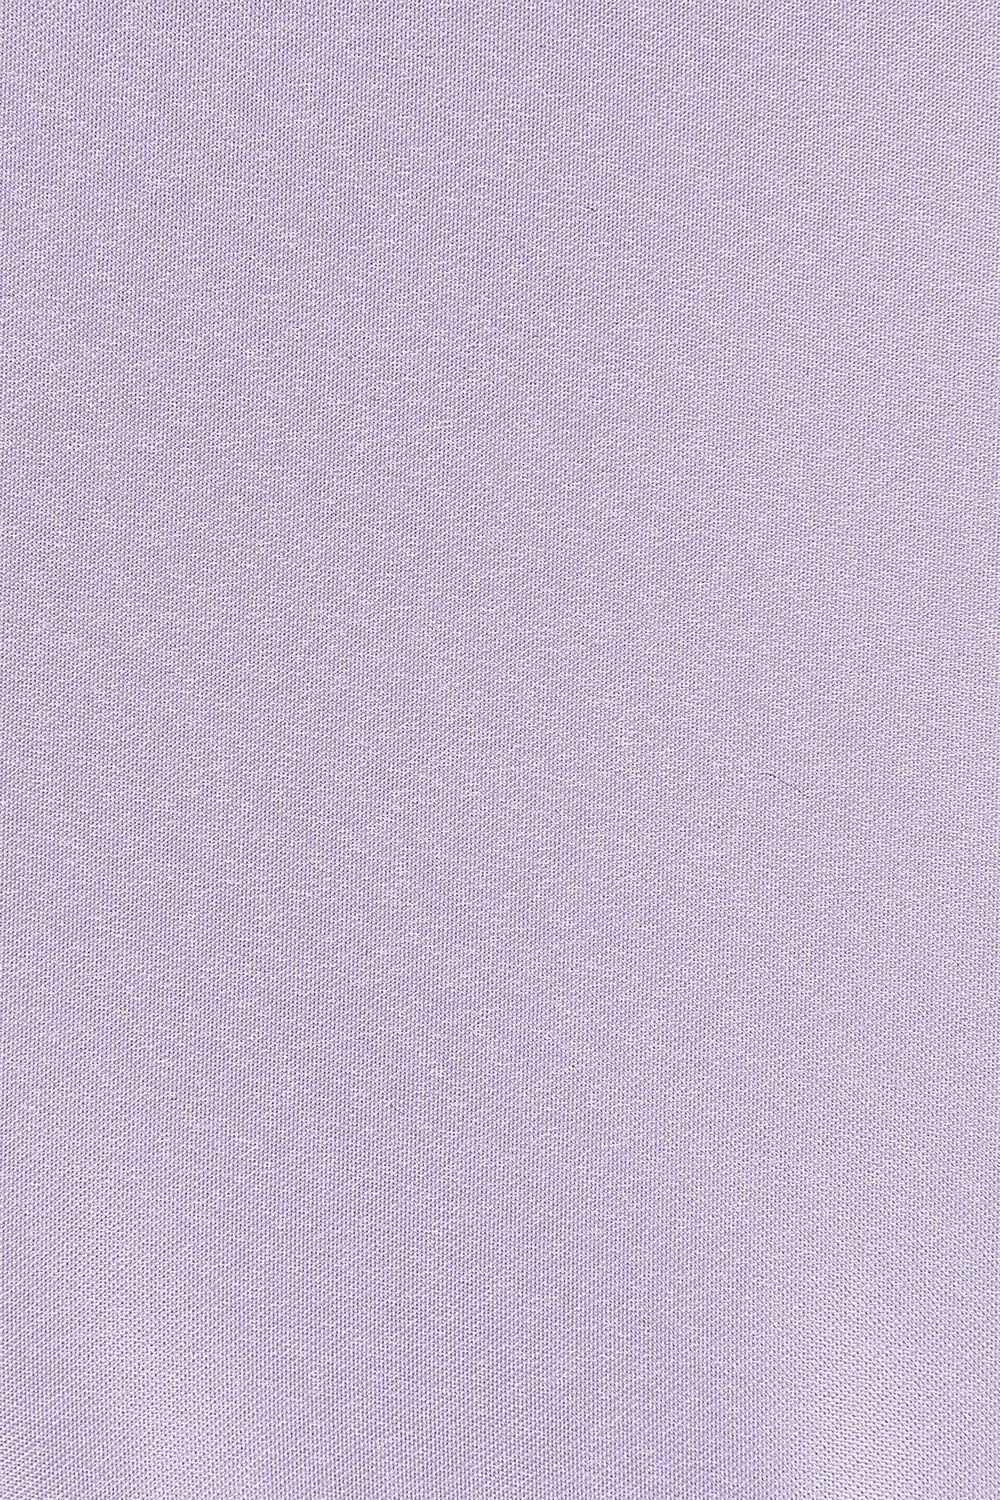 Plain lilac classic mens tie & pocket square set